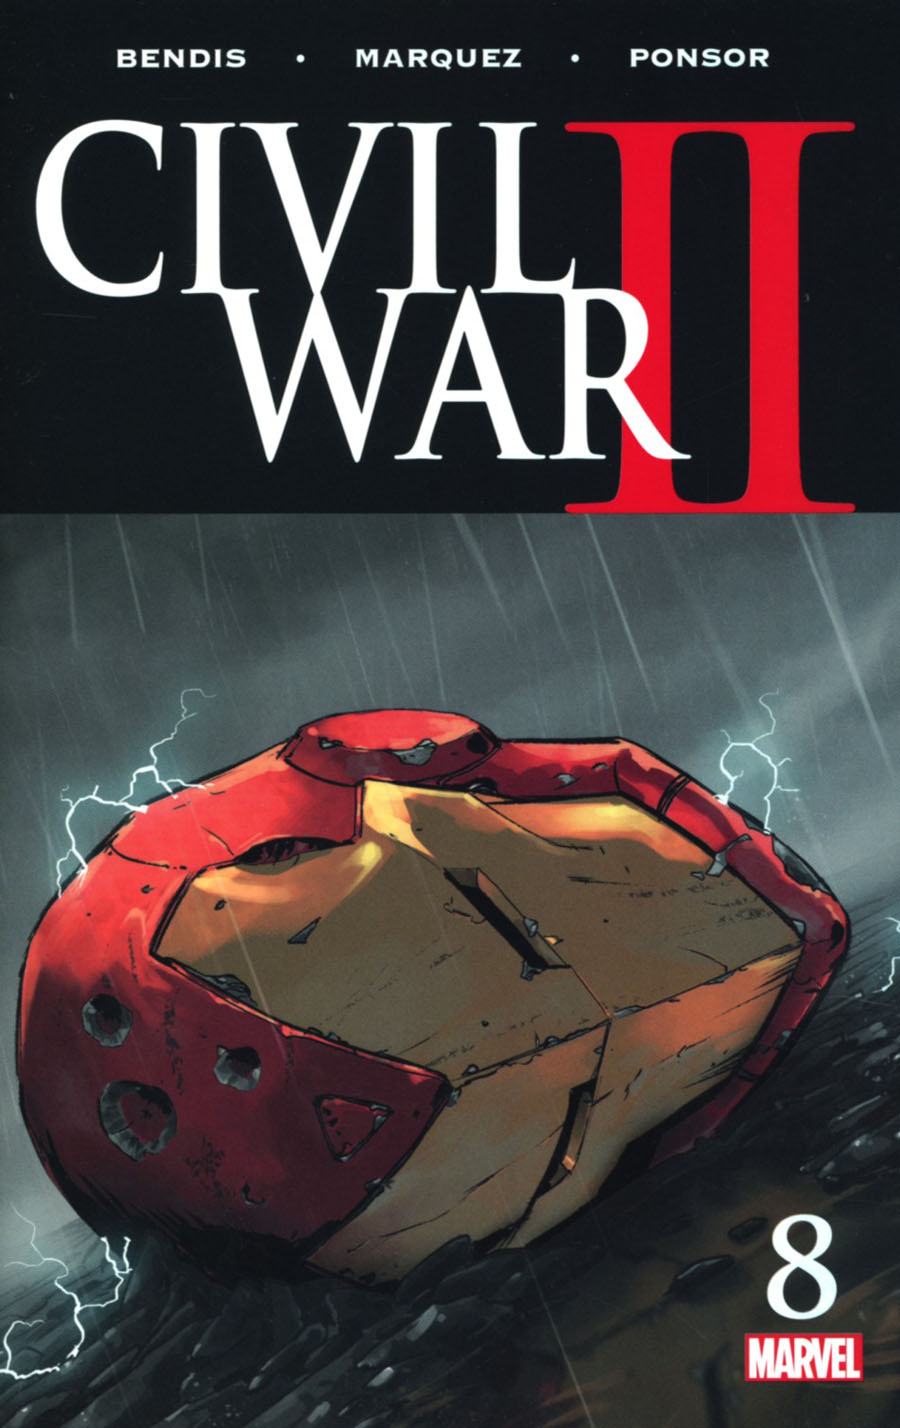 Civil War II #8 Cover A Regular Cover